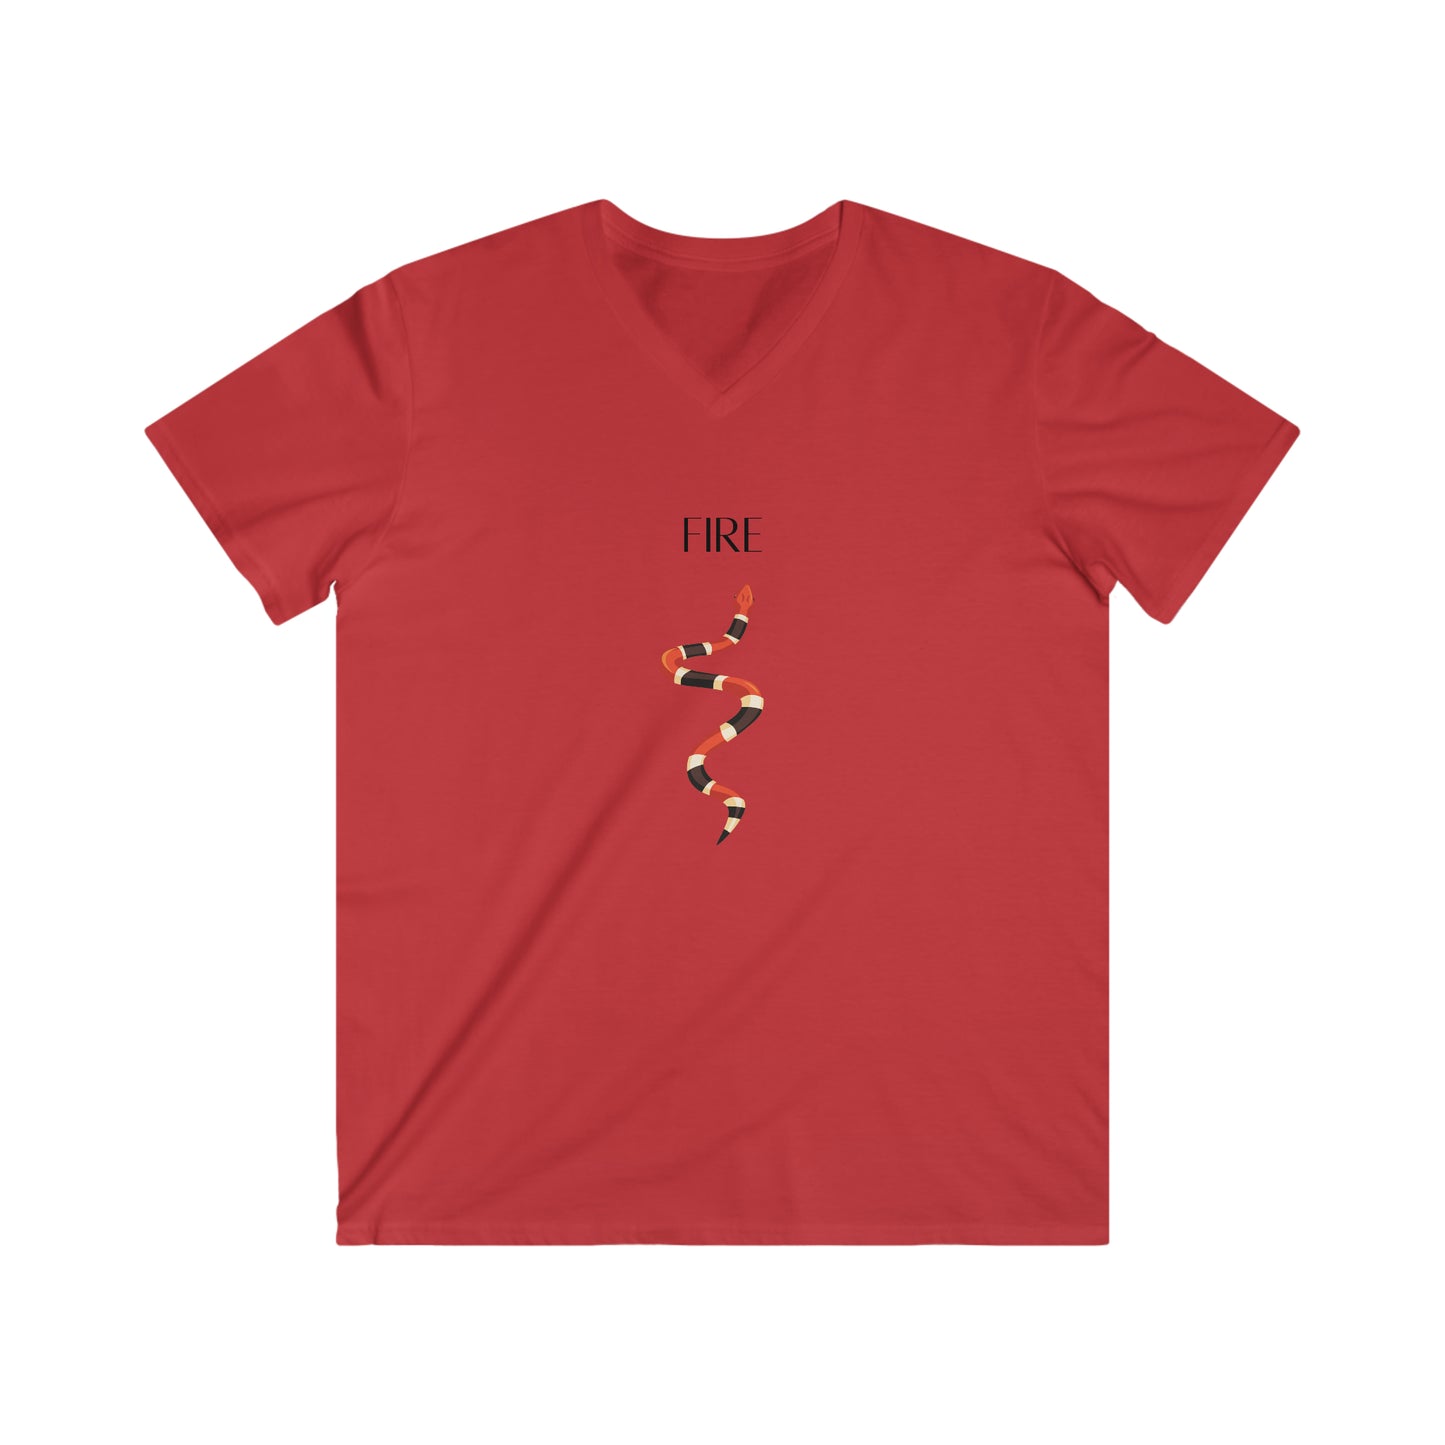 Fire Coral Snake Men's Fitted V-Neck T-Shirt